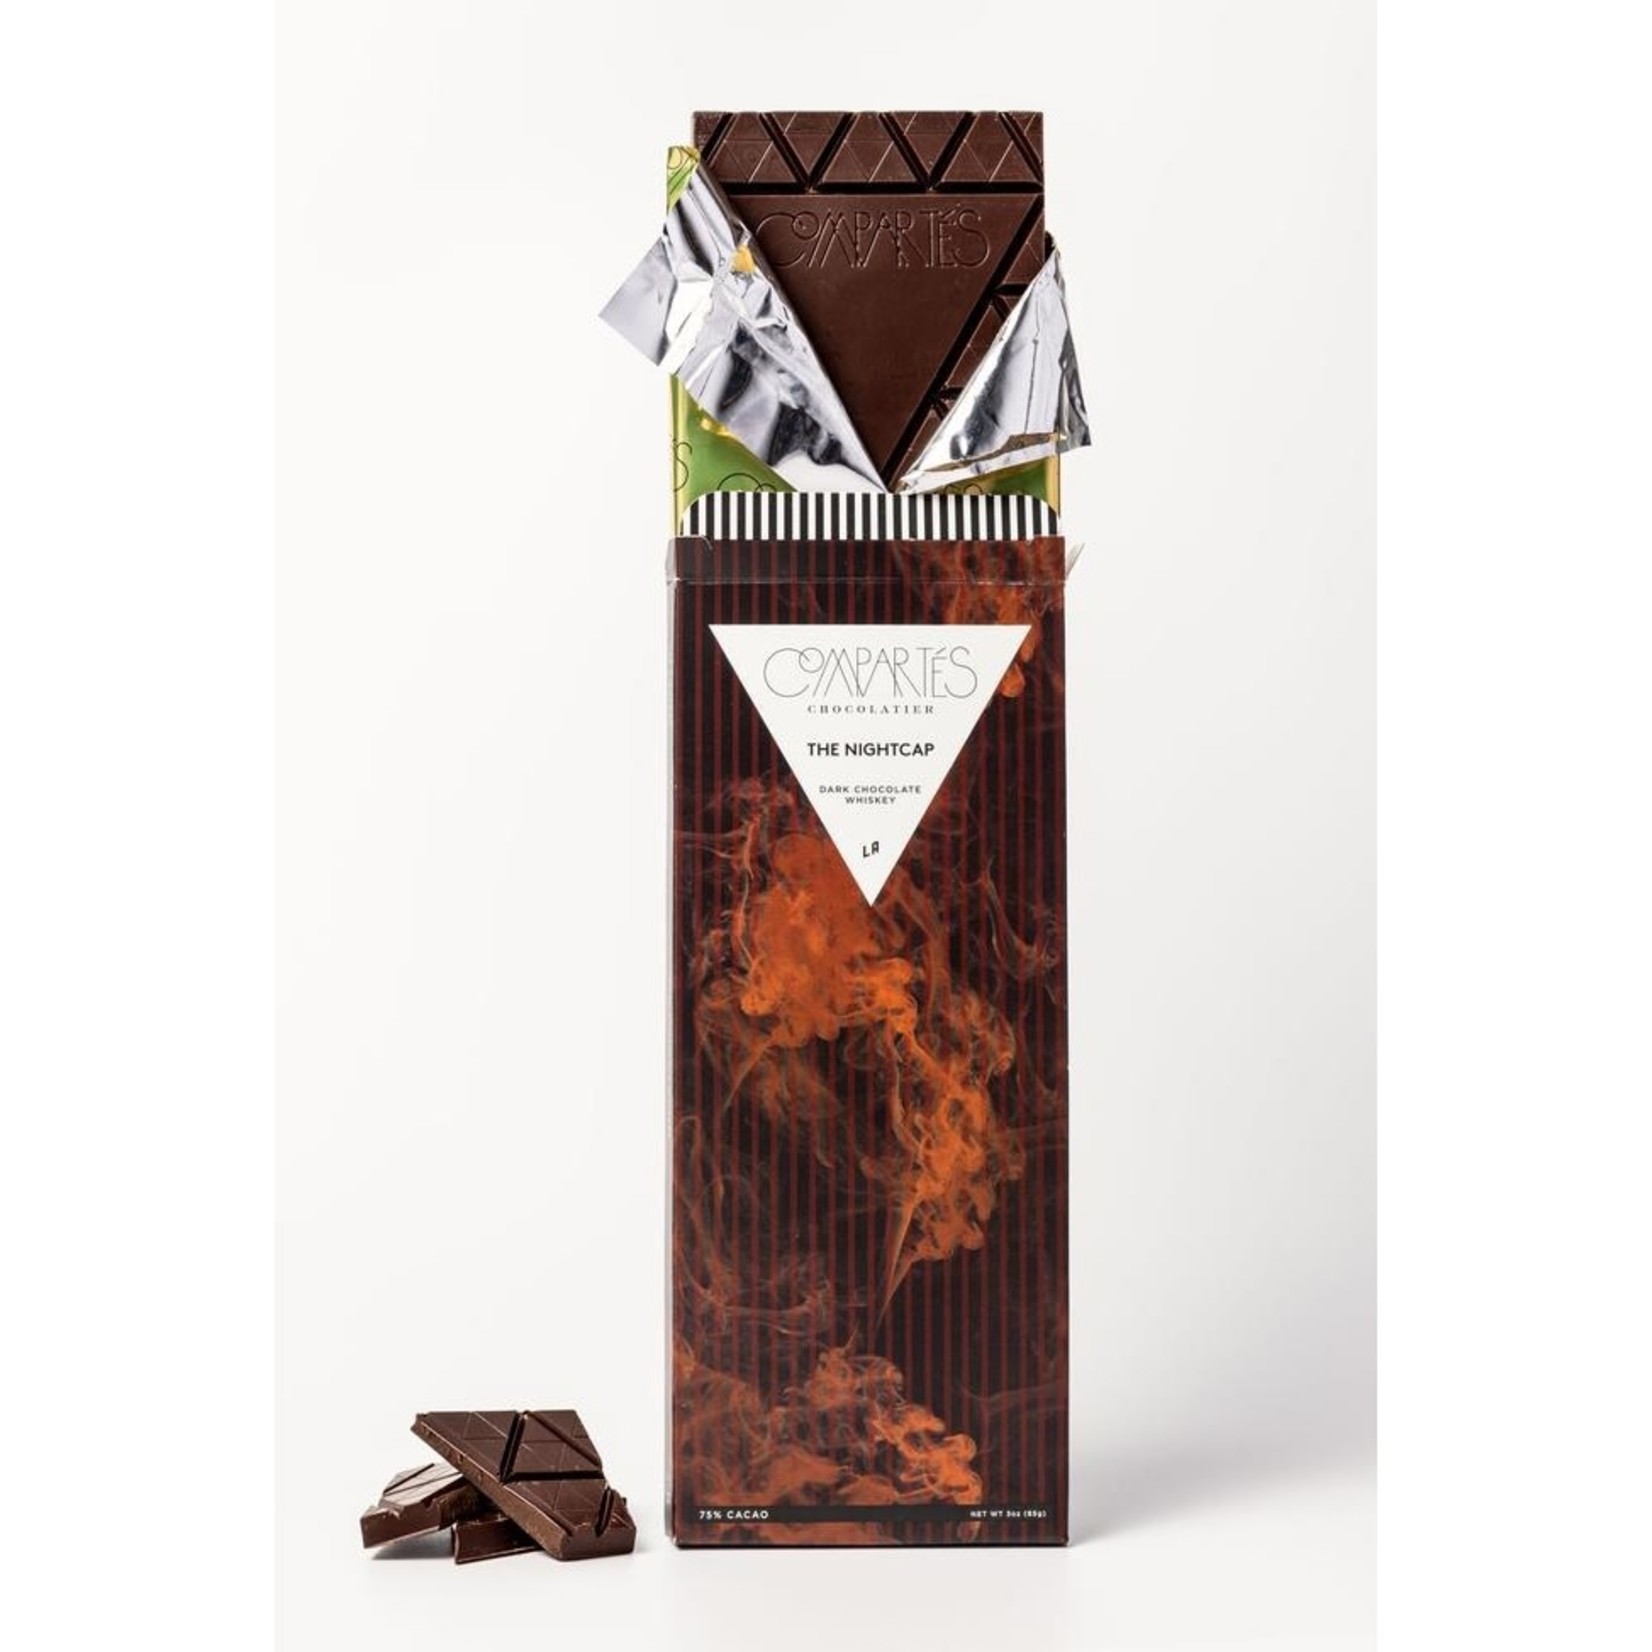 Compartes Chocolate Compartes Nightcap Whisky Dark Chocolate Bar